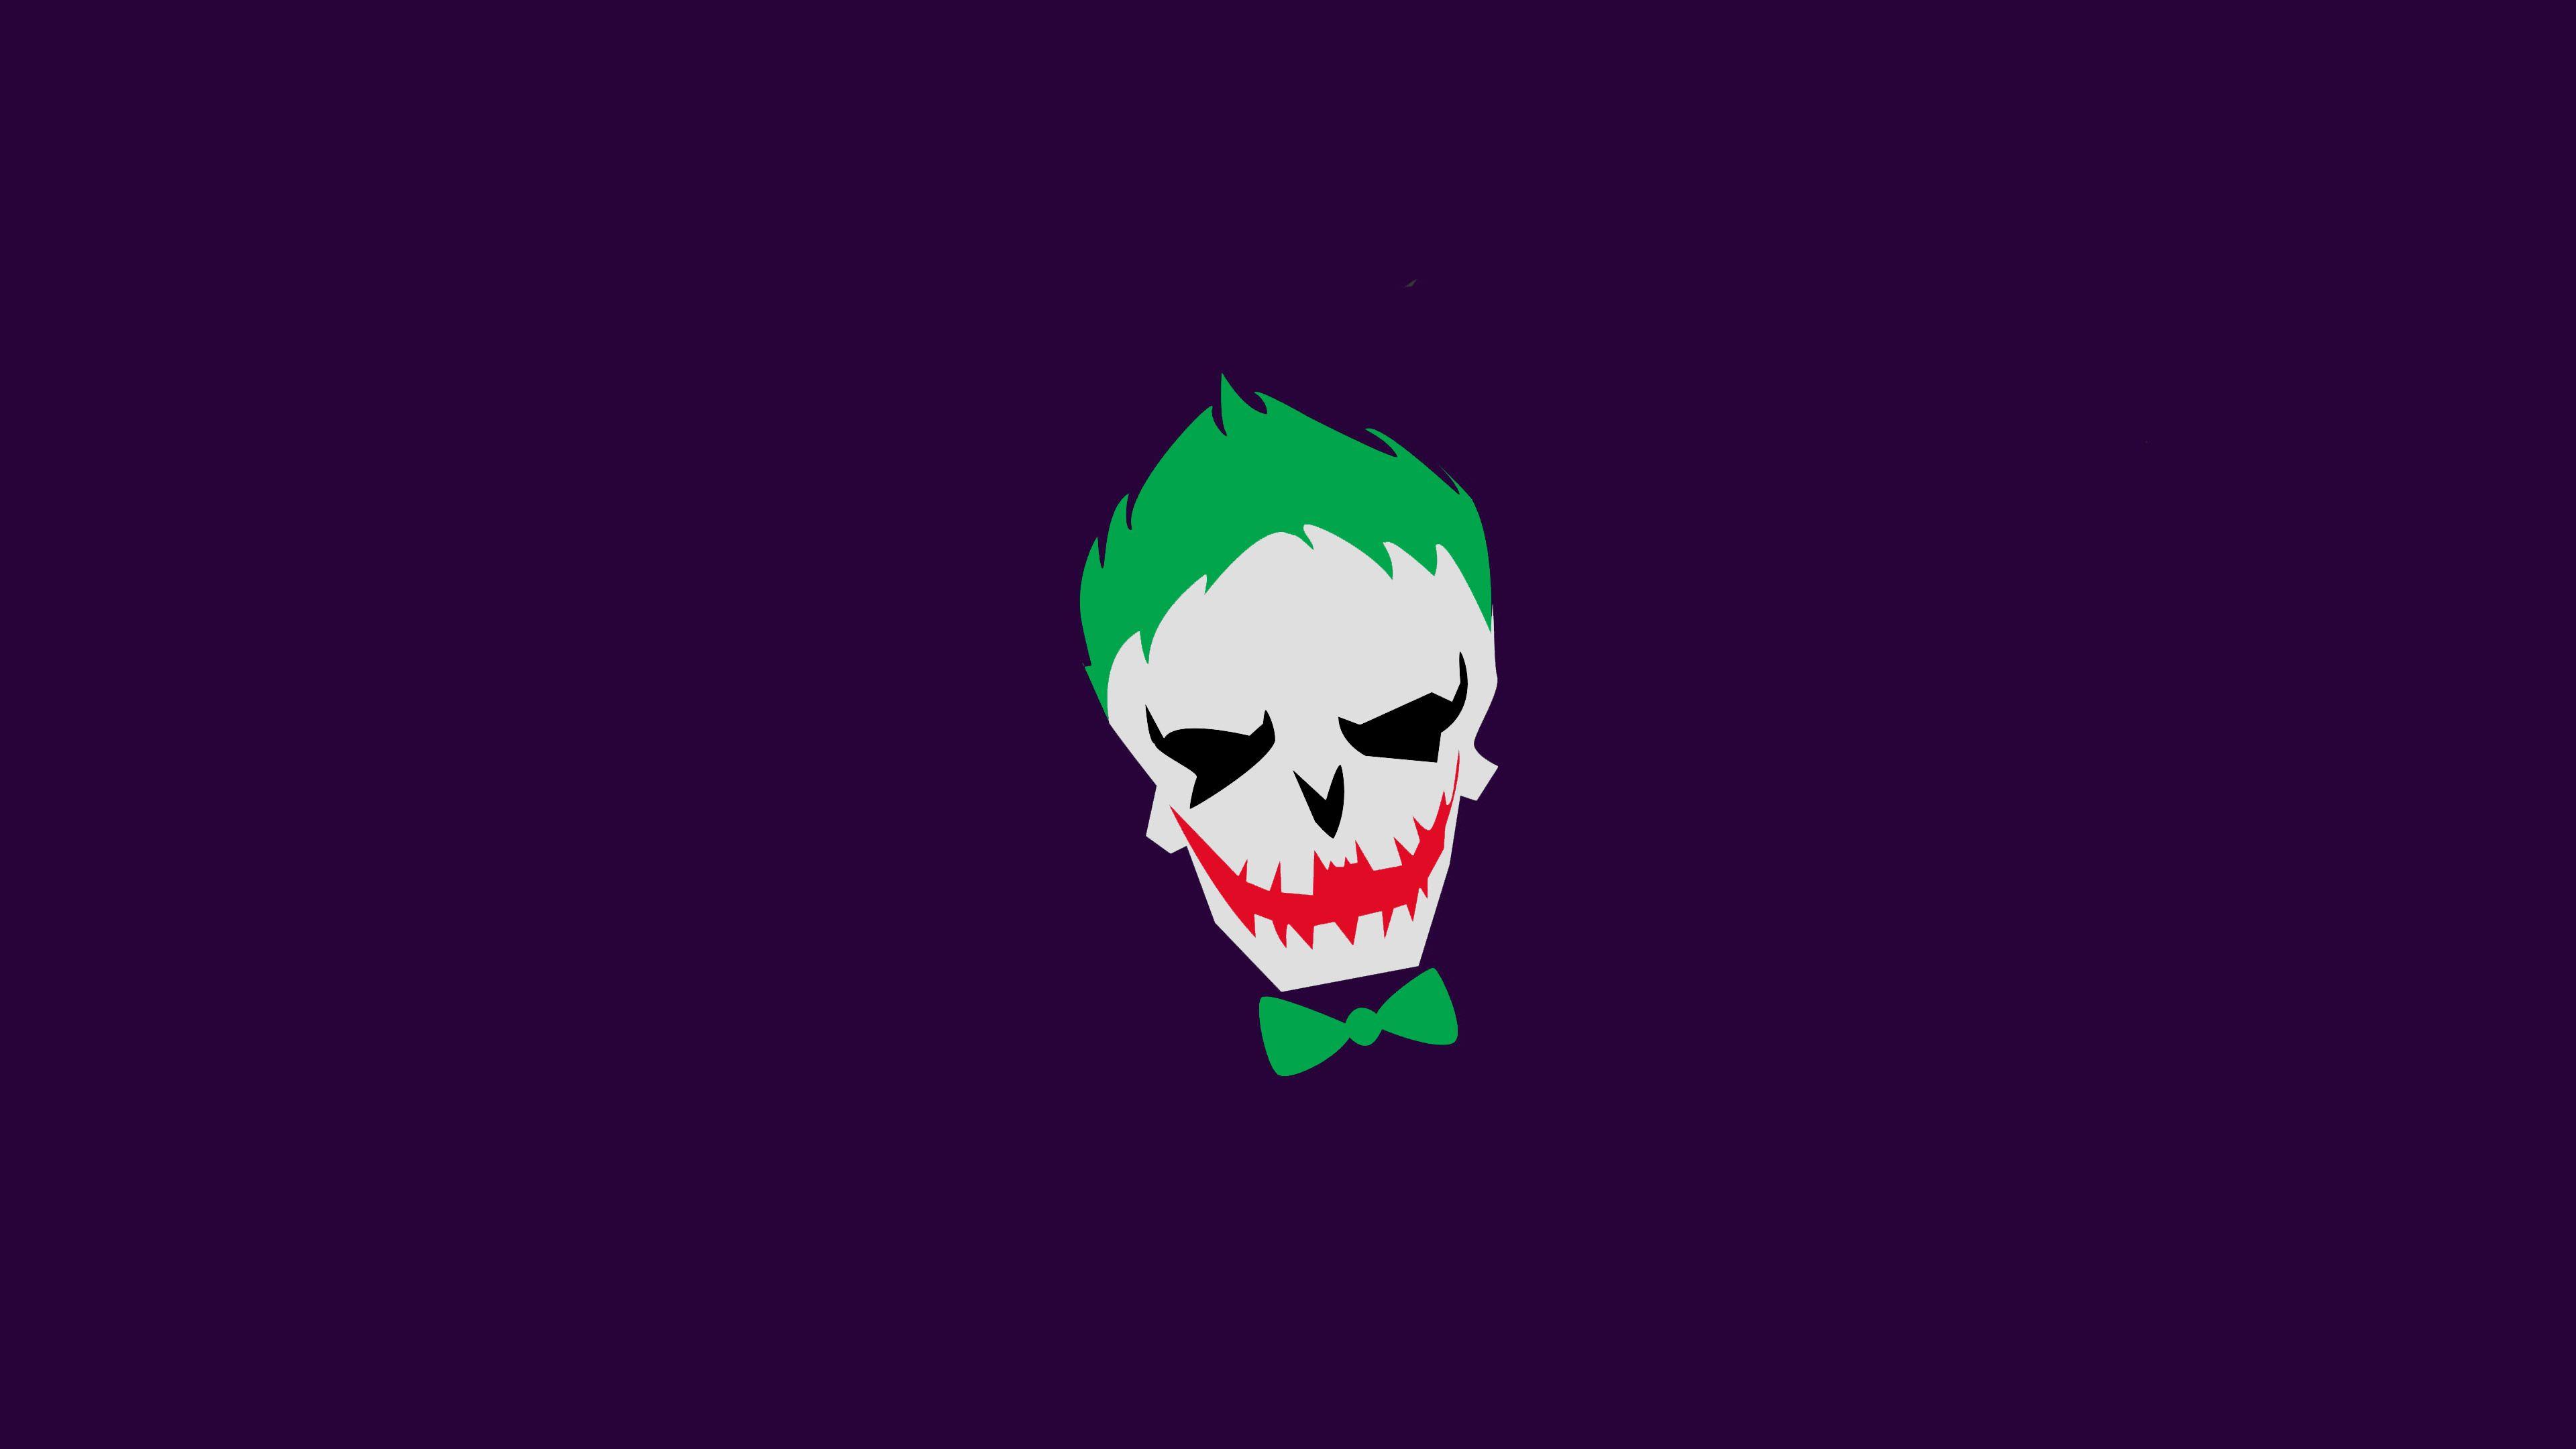 Joker 4k Ultra Wallpapers Top Free Joker 4k Ultra Backgrounds